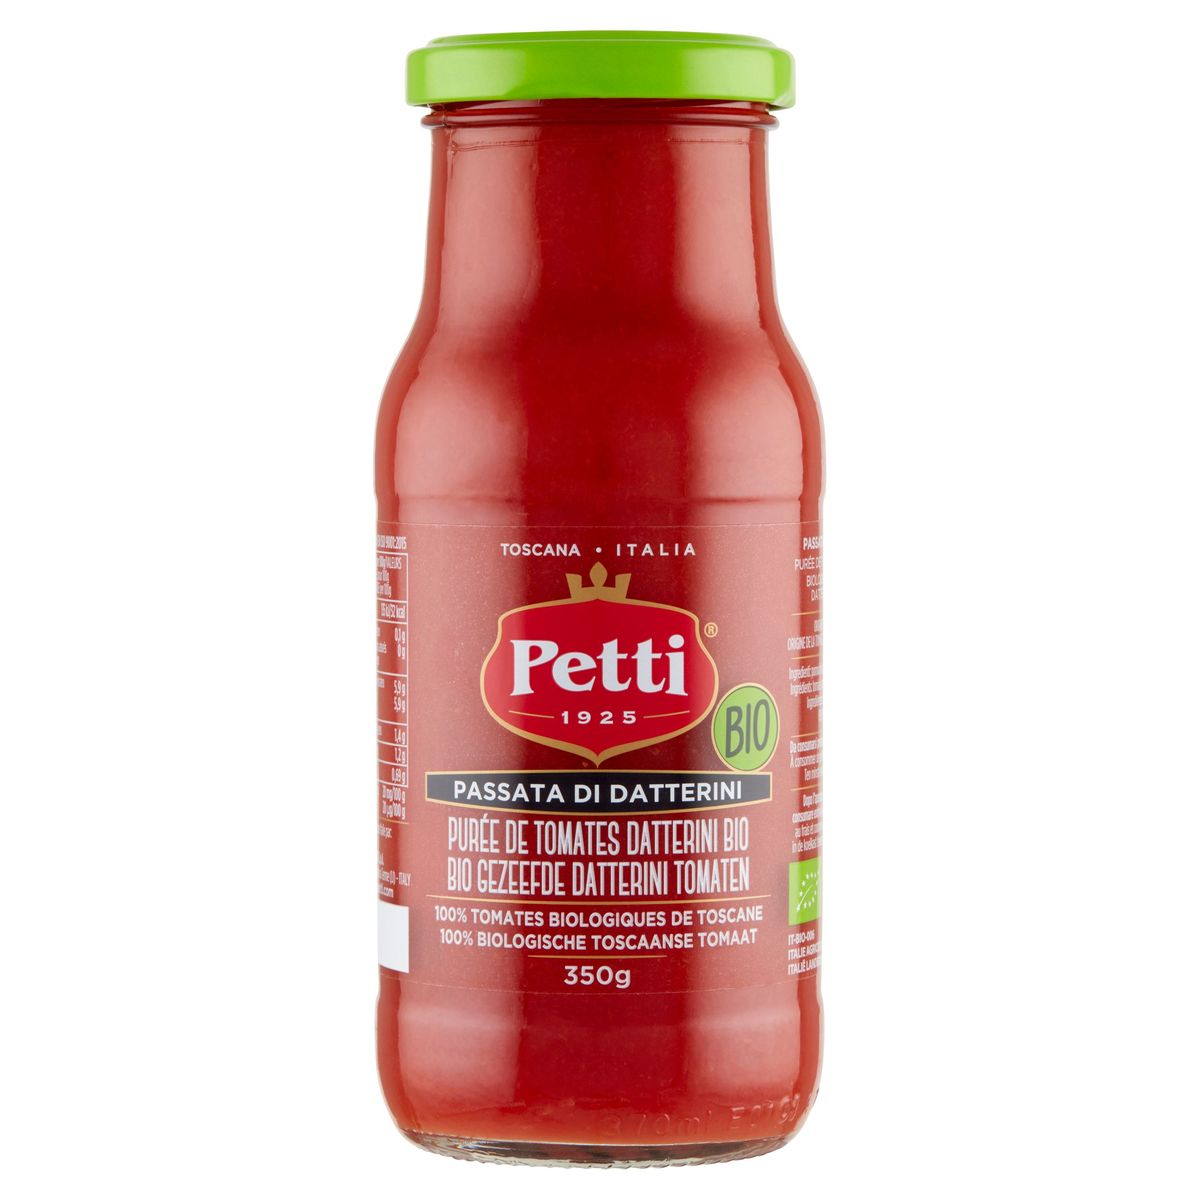 Petti Purée de Tomates Datterini Bio 350 g